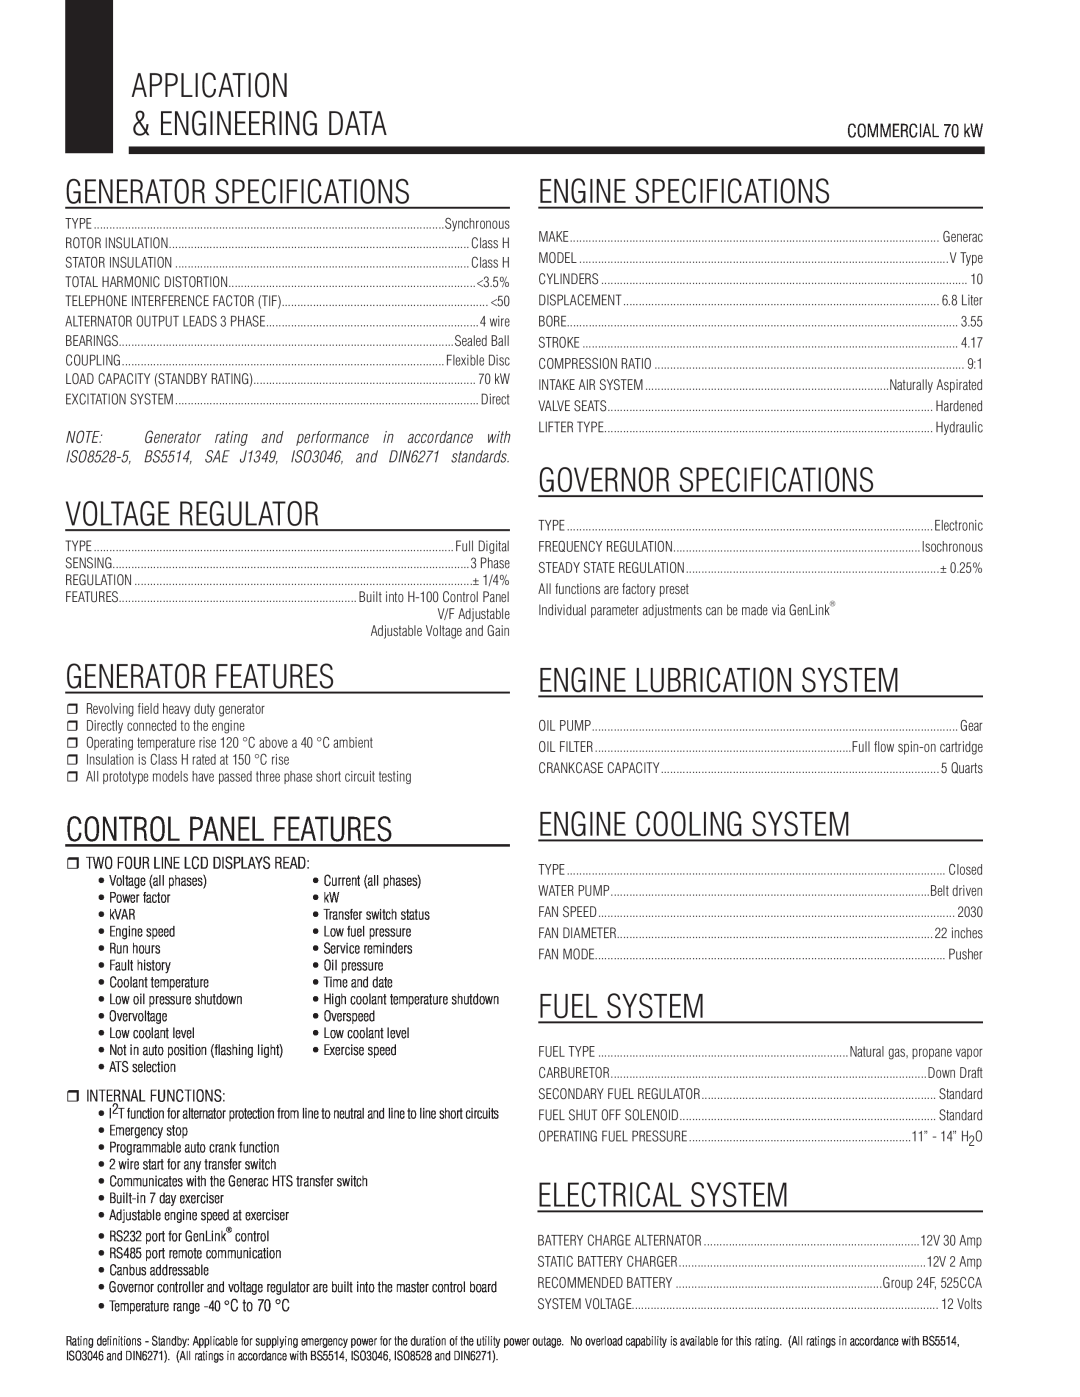 Generac Power Systems UL 2200 manual Application & Engineering Data 